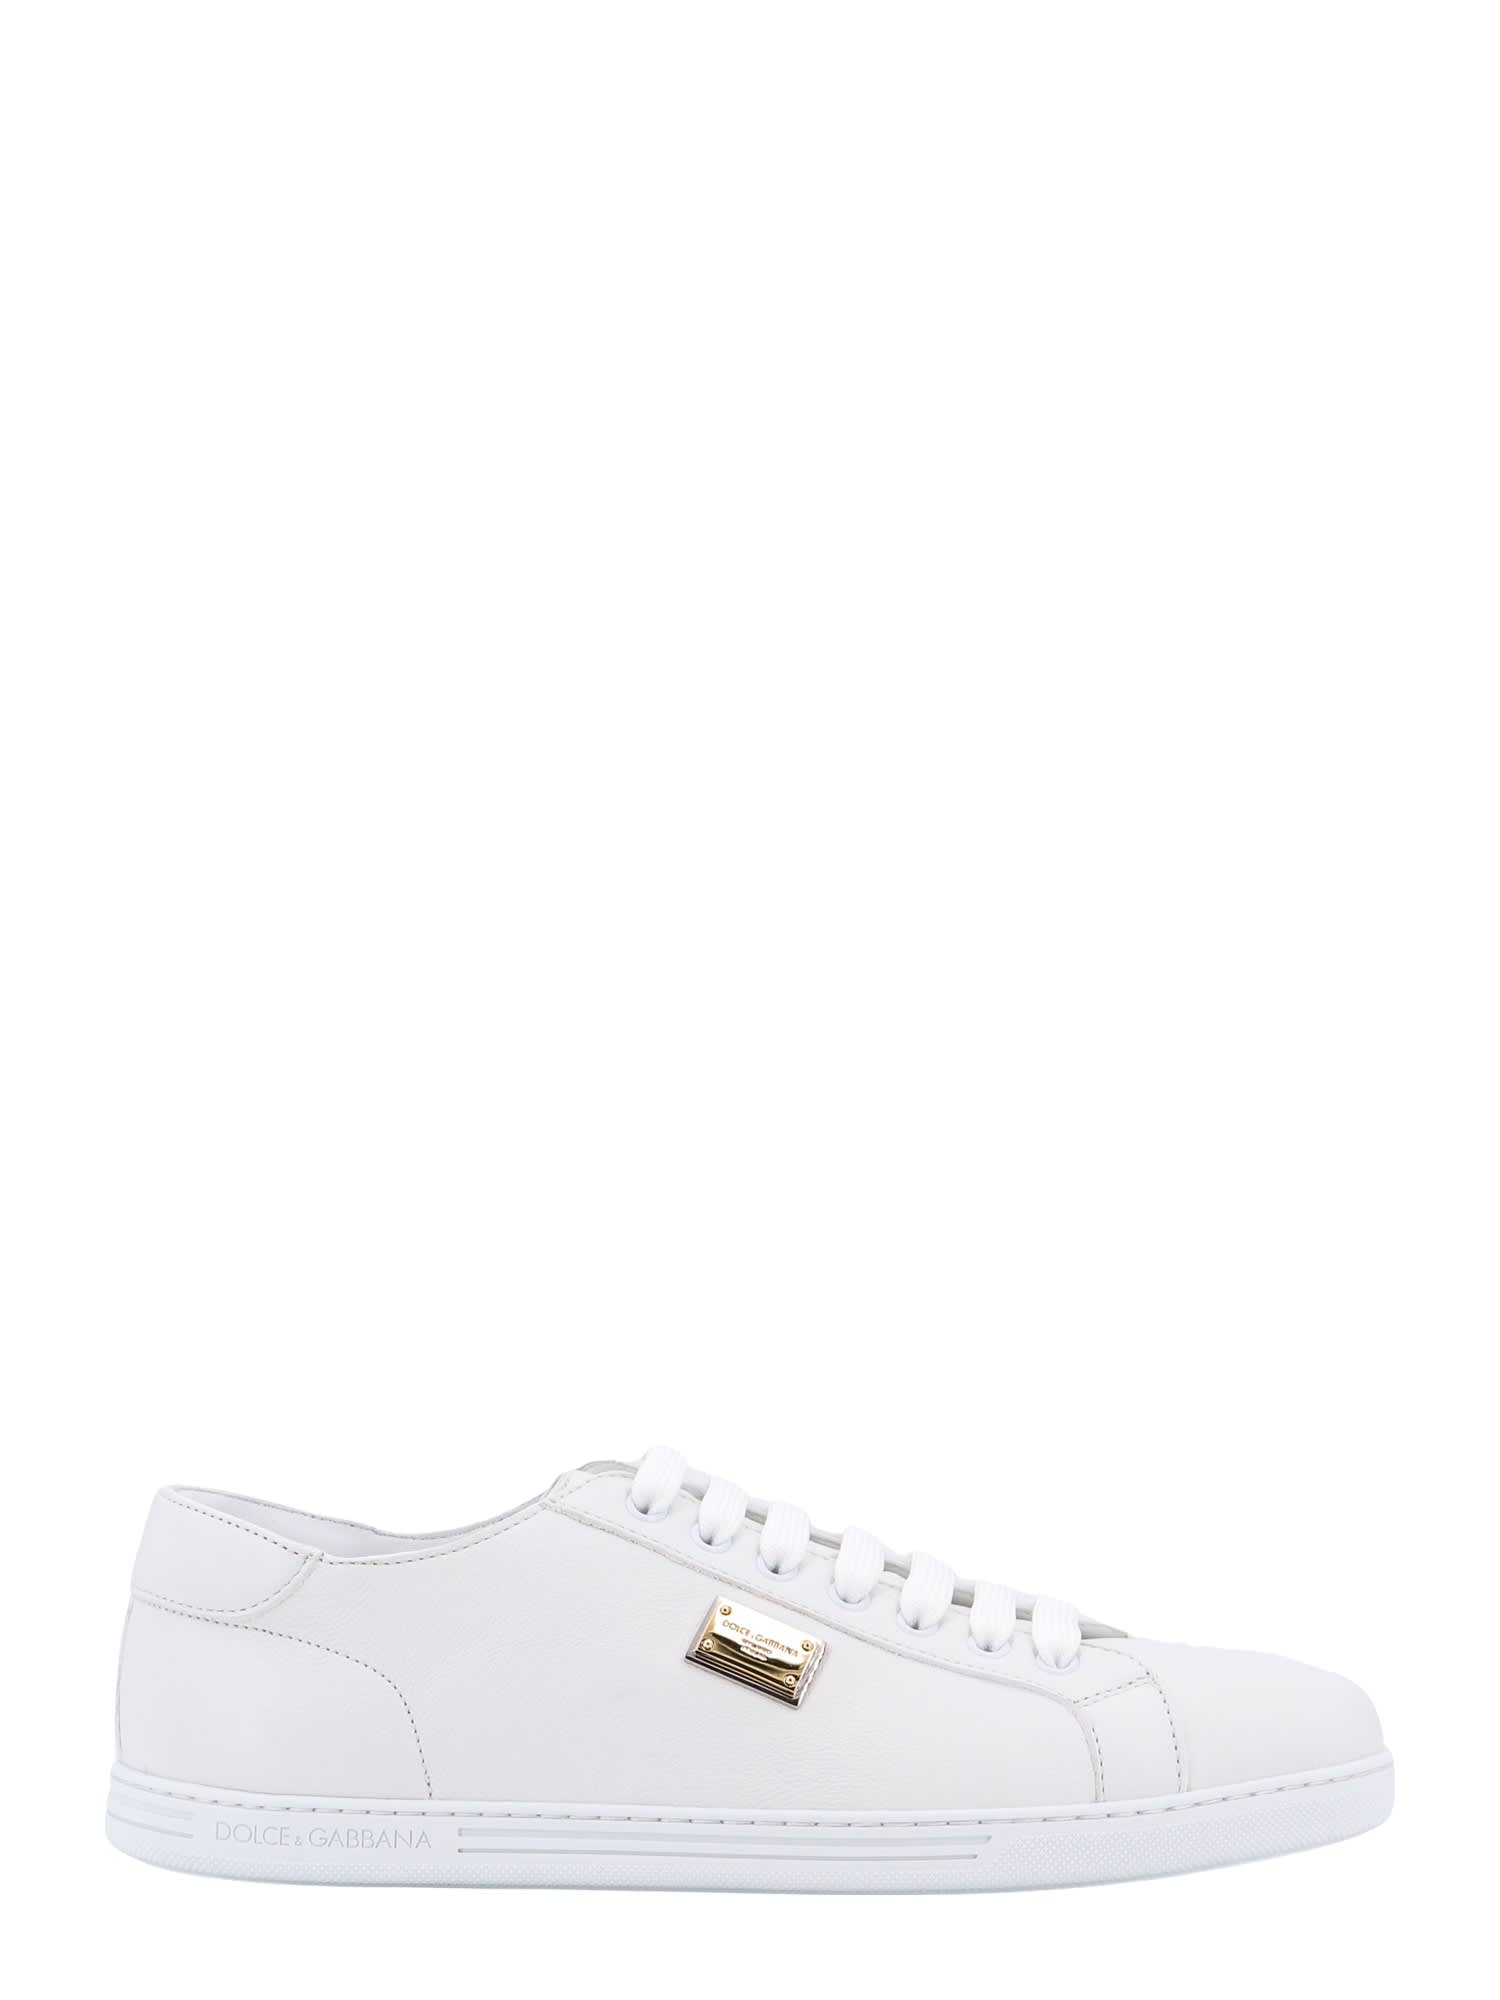 Dolce & Gabbana Saint Tropez Trainers In White